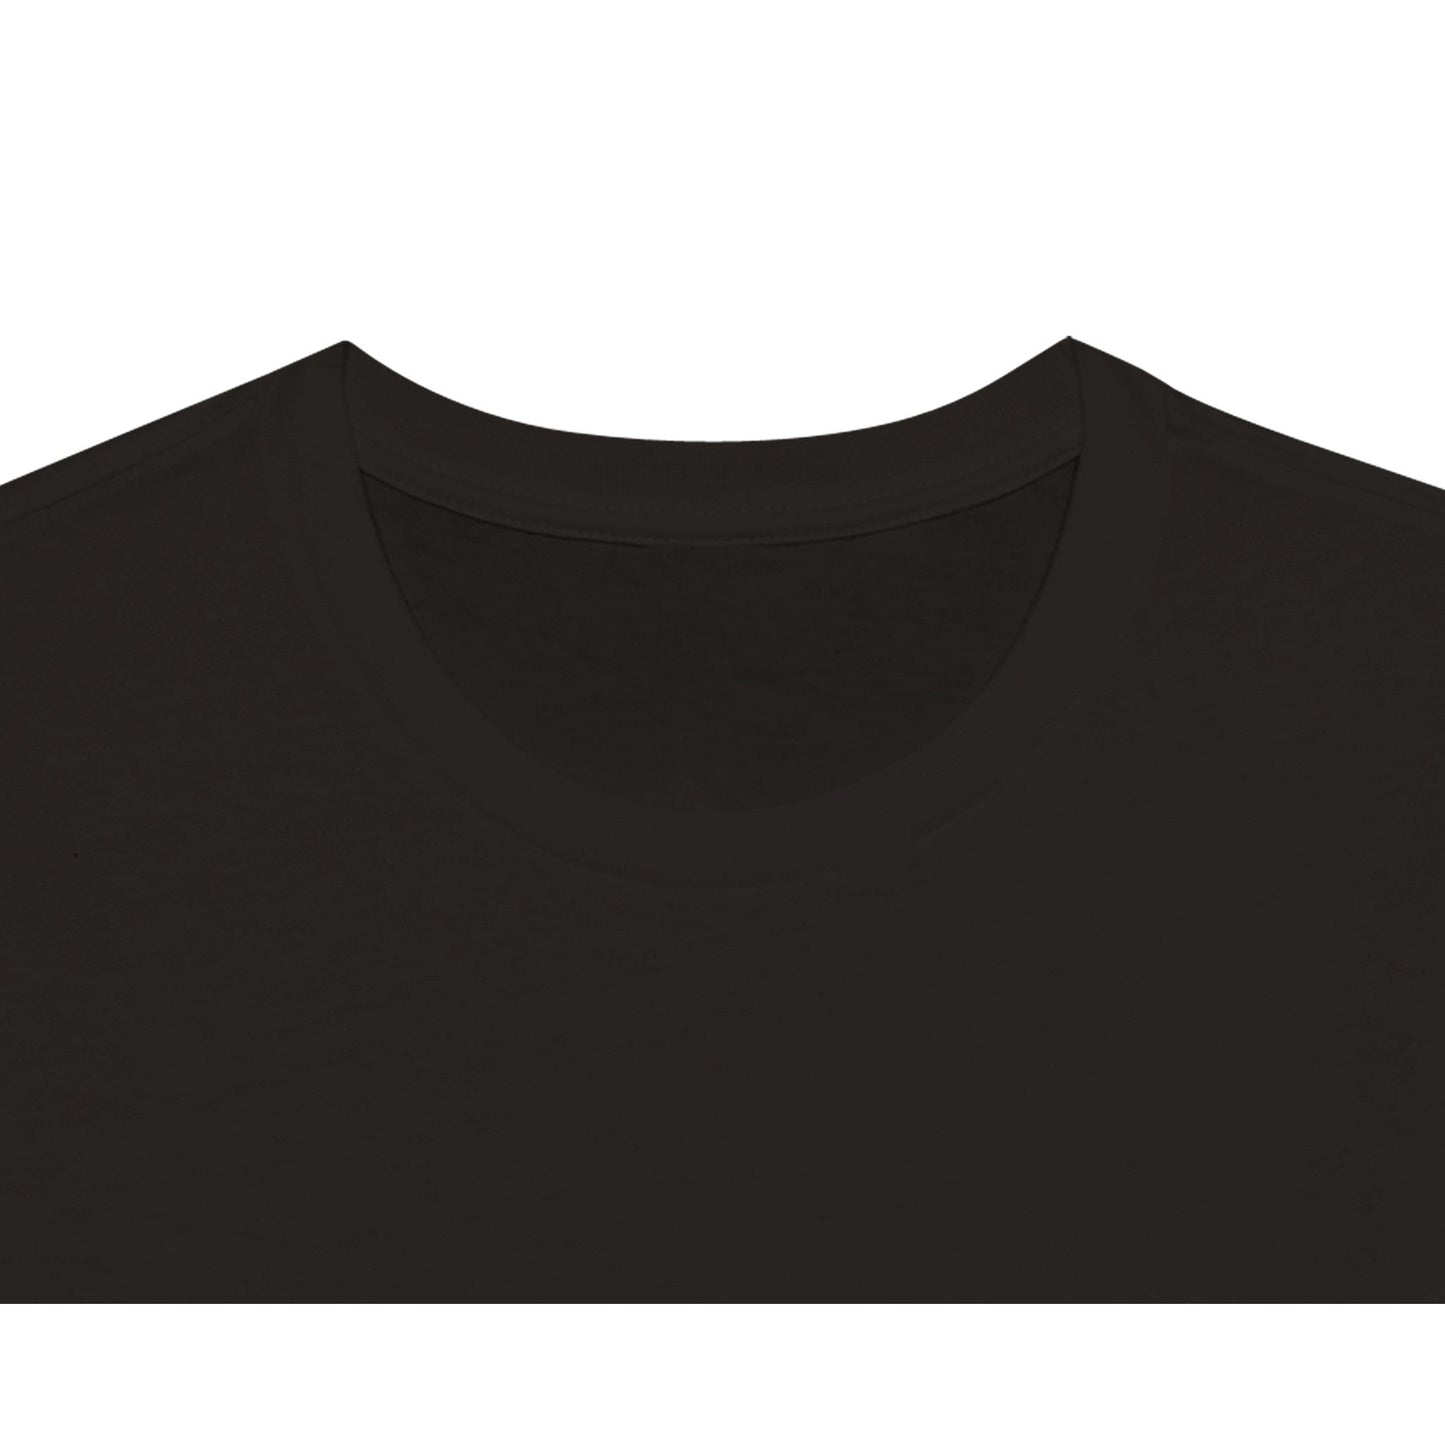 Premium Women's Crewneck T-shirt with a Golden Retriever Paper Quilling Design - Hobbster